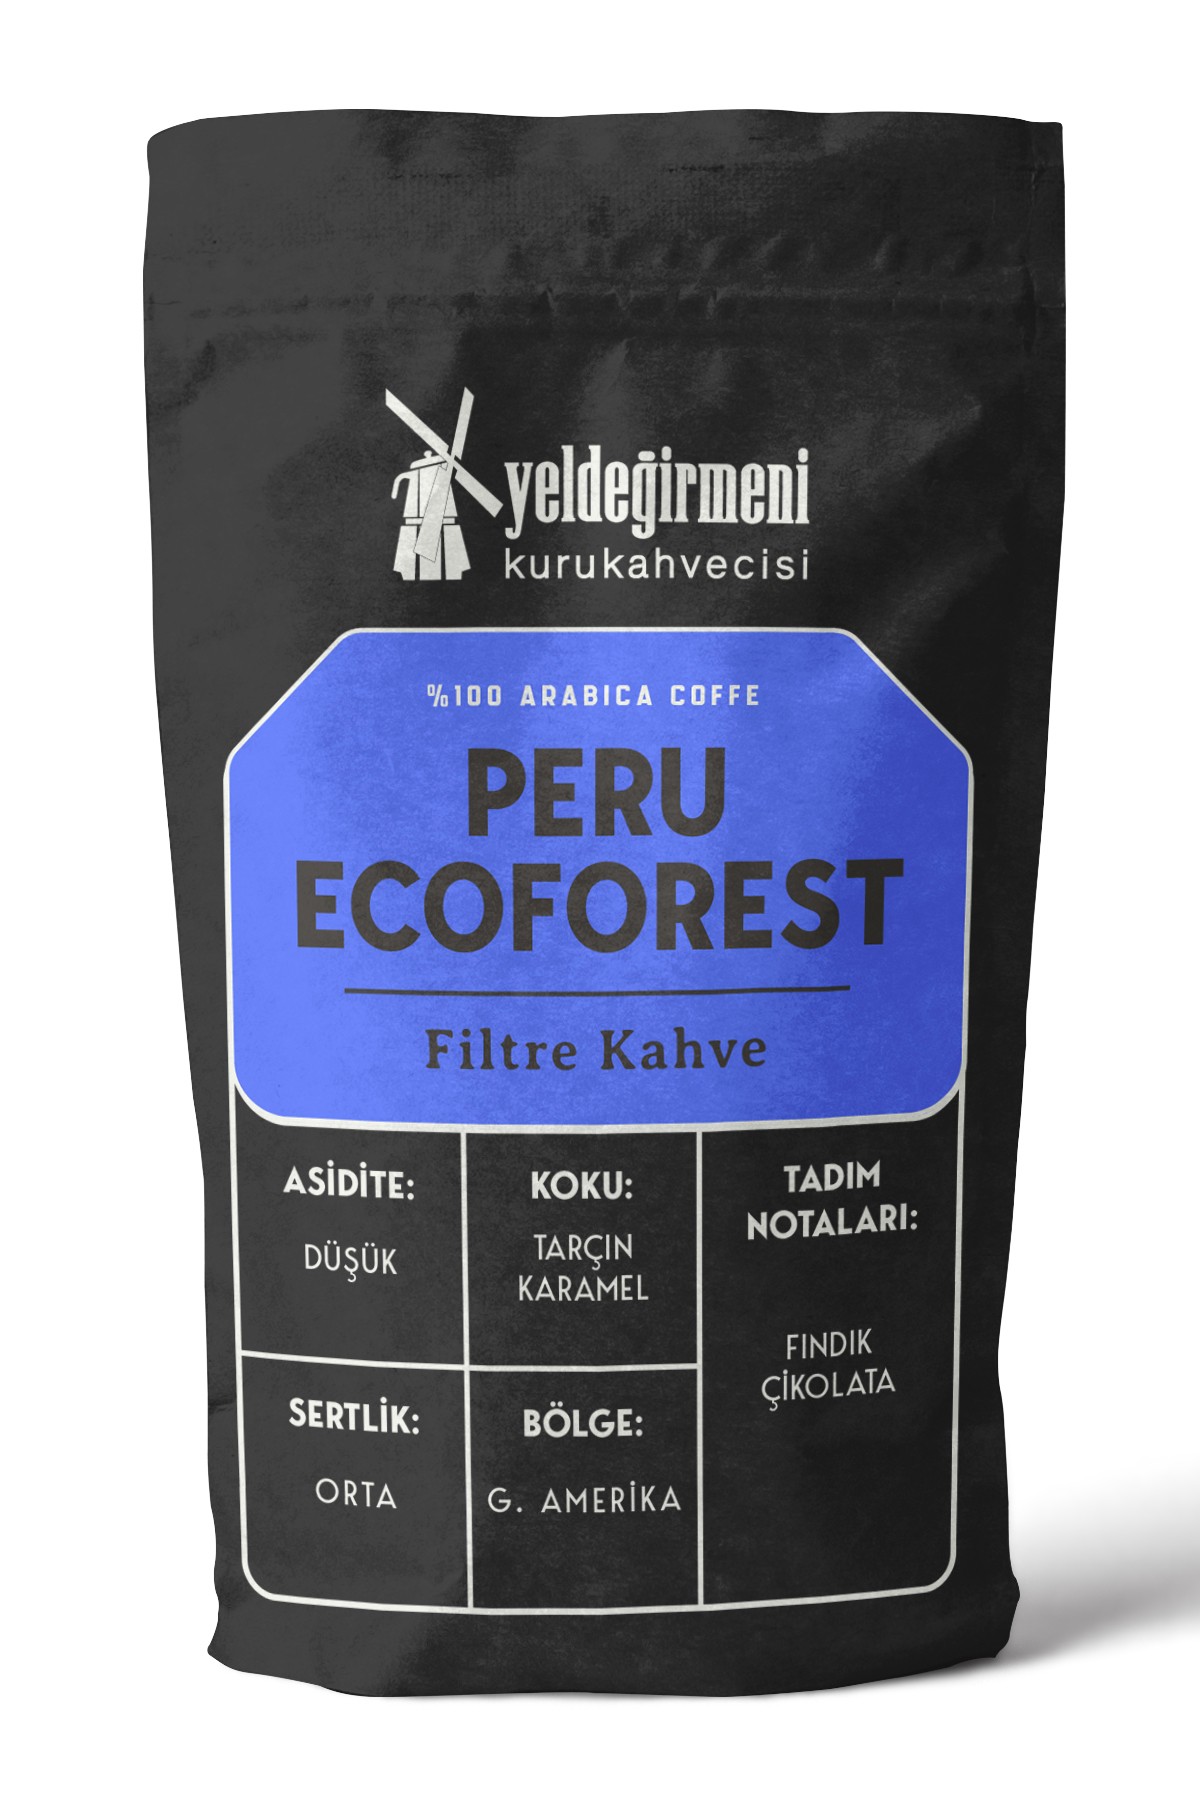 Peru Ecoforest Filtre Kahve